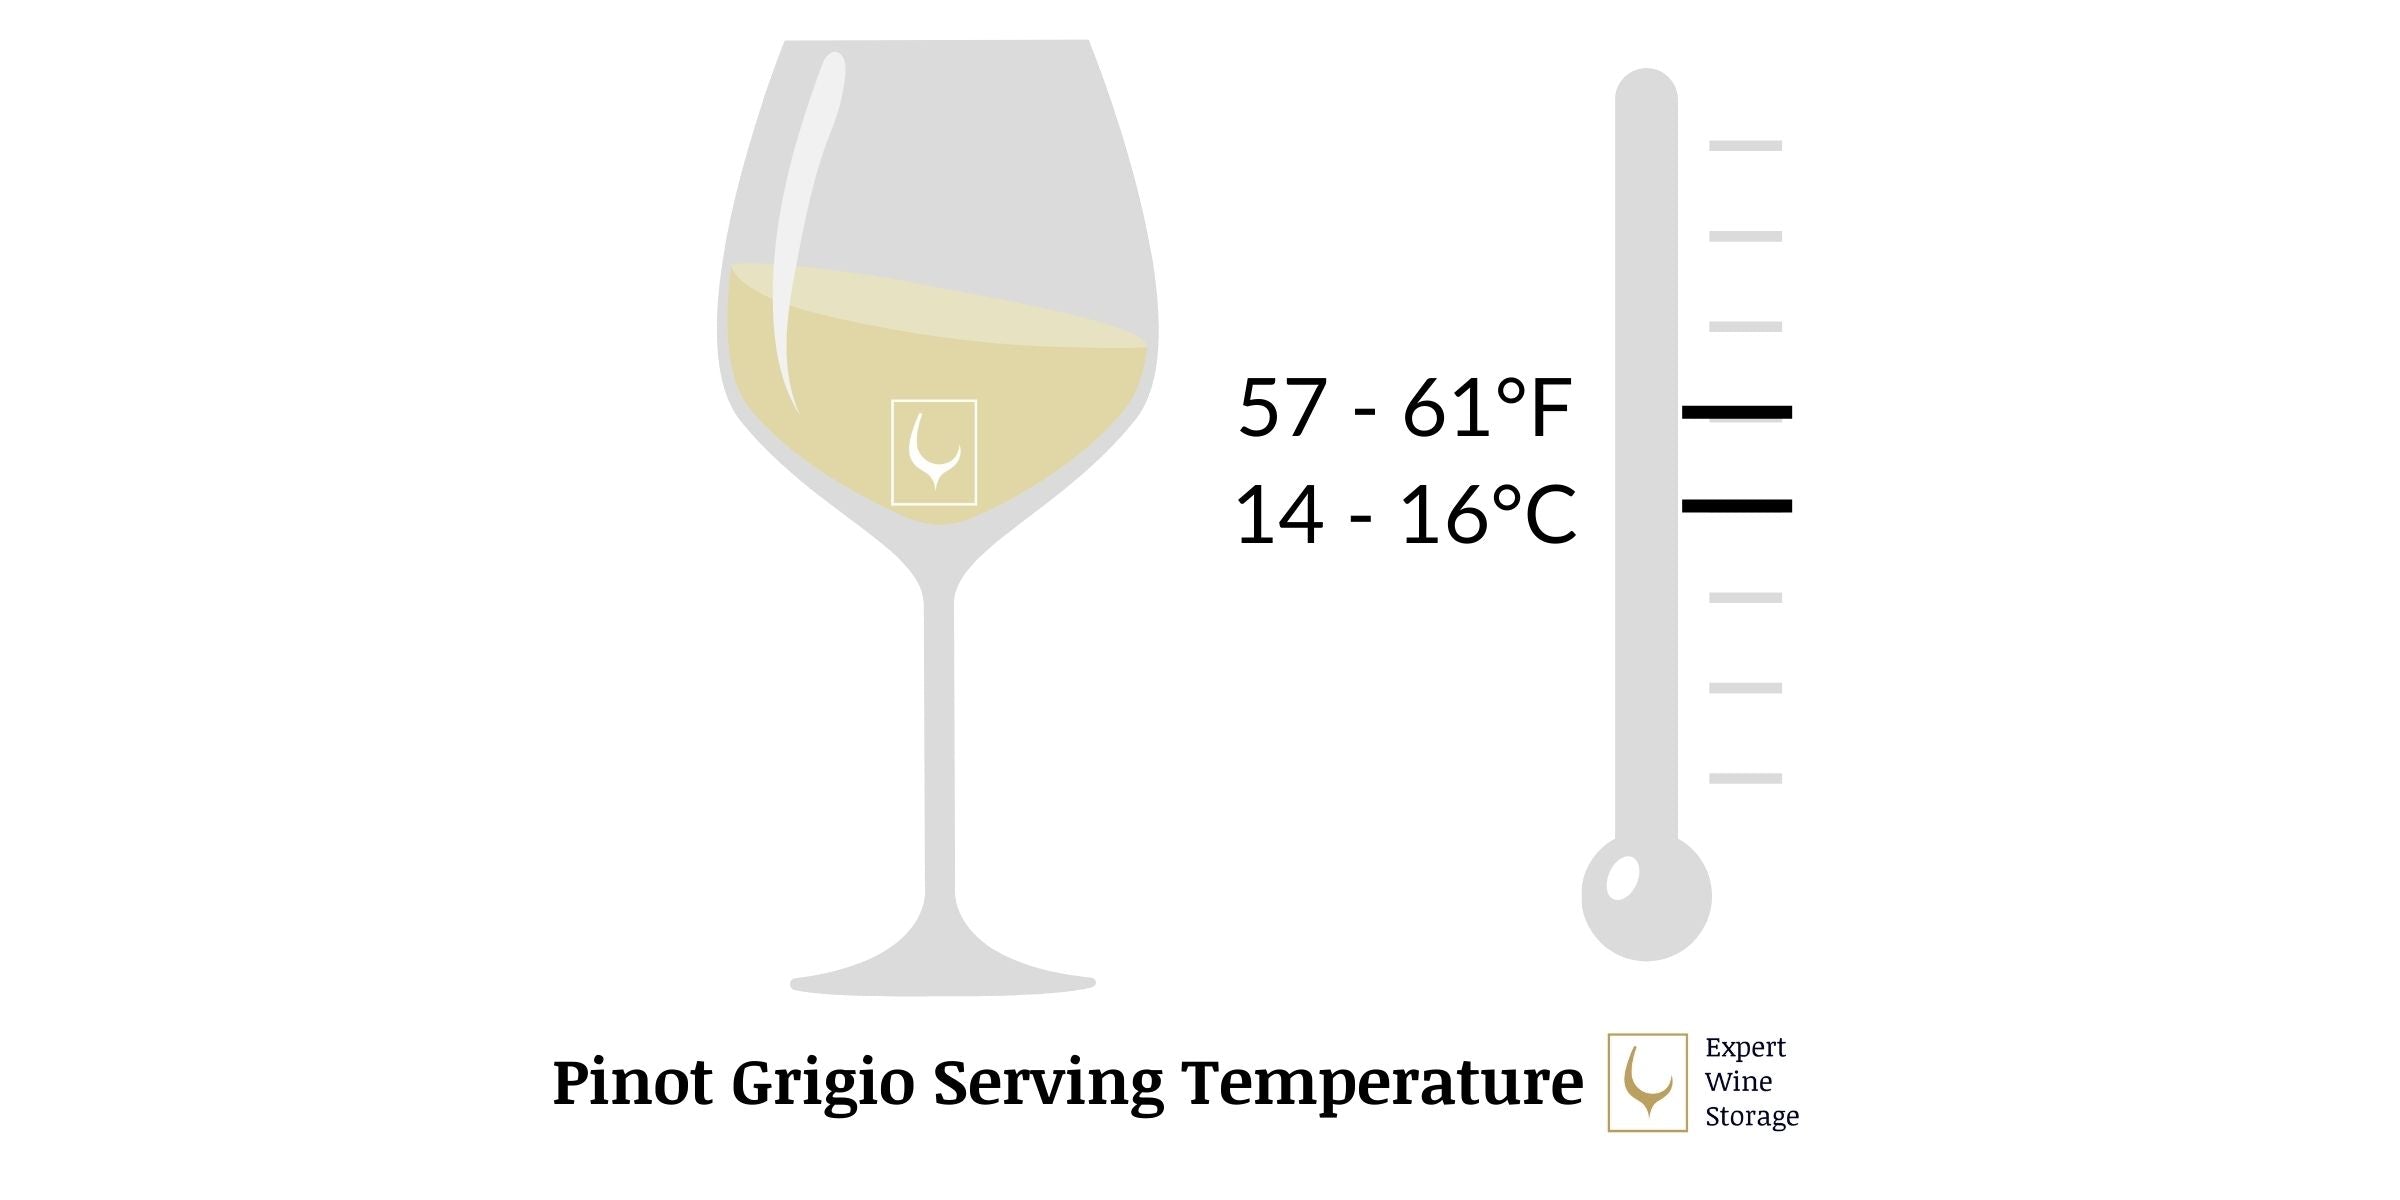 Pinot Grigio Serving Temp Infographic